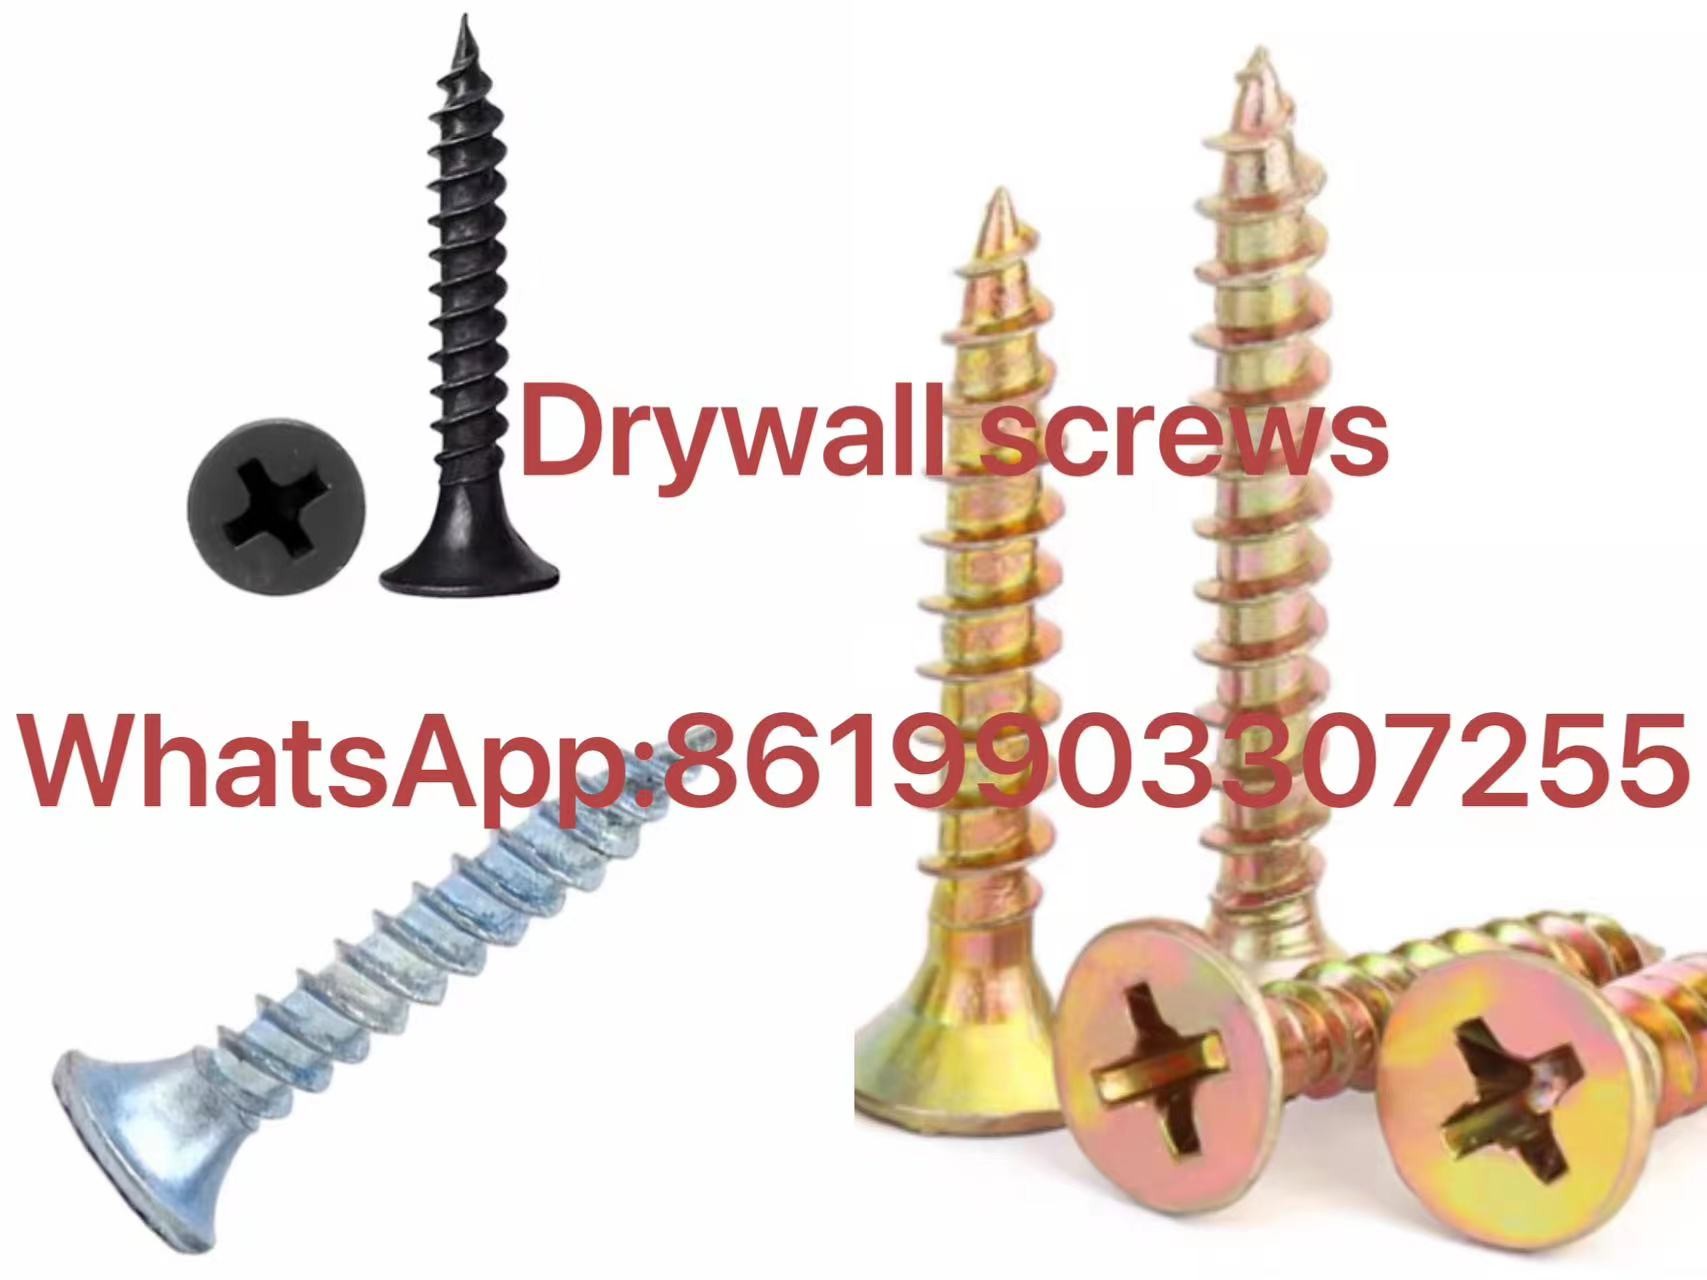 factory sales drywall screws WhatsApp:8619903307255-pic_1